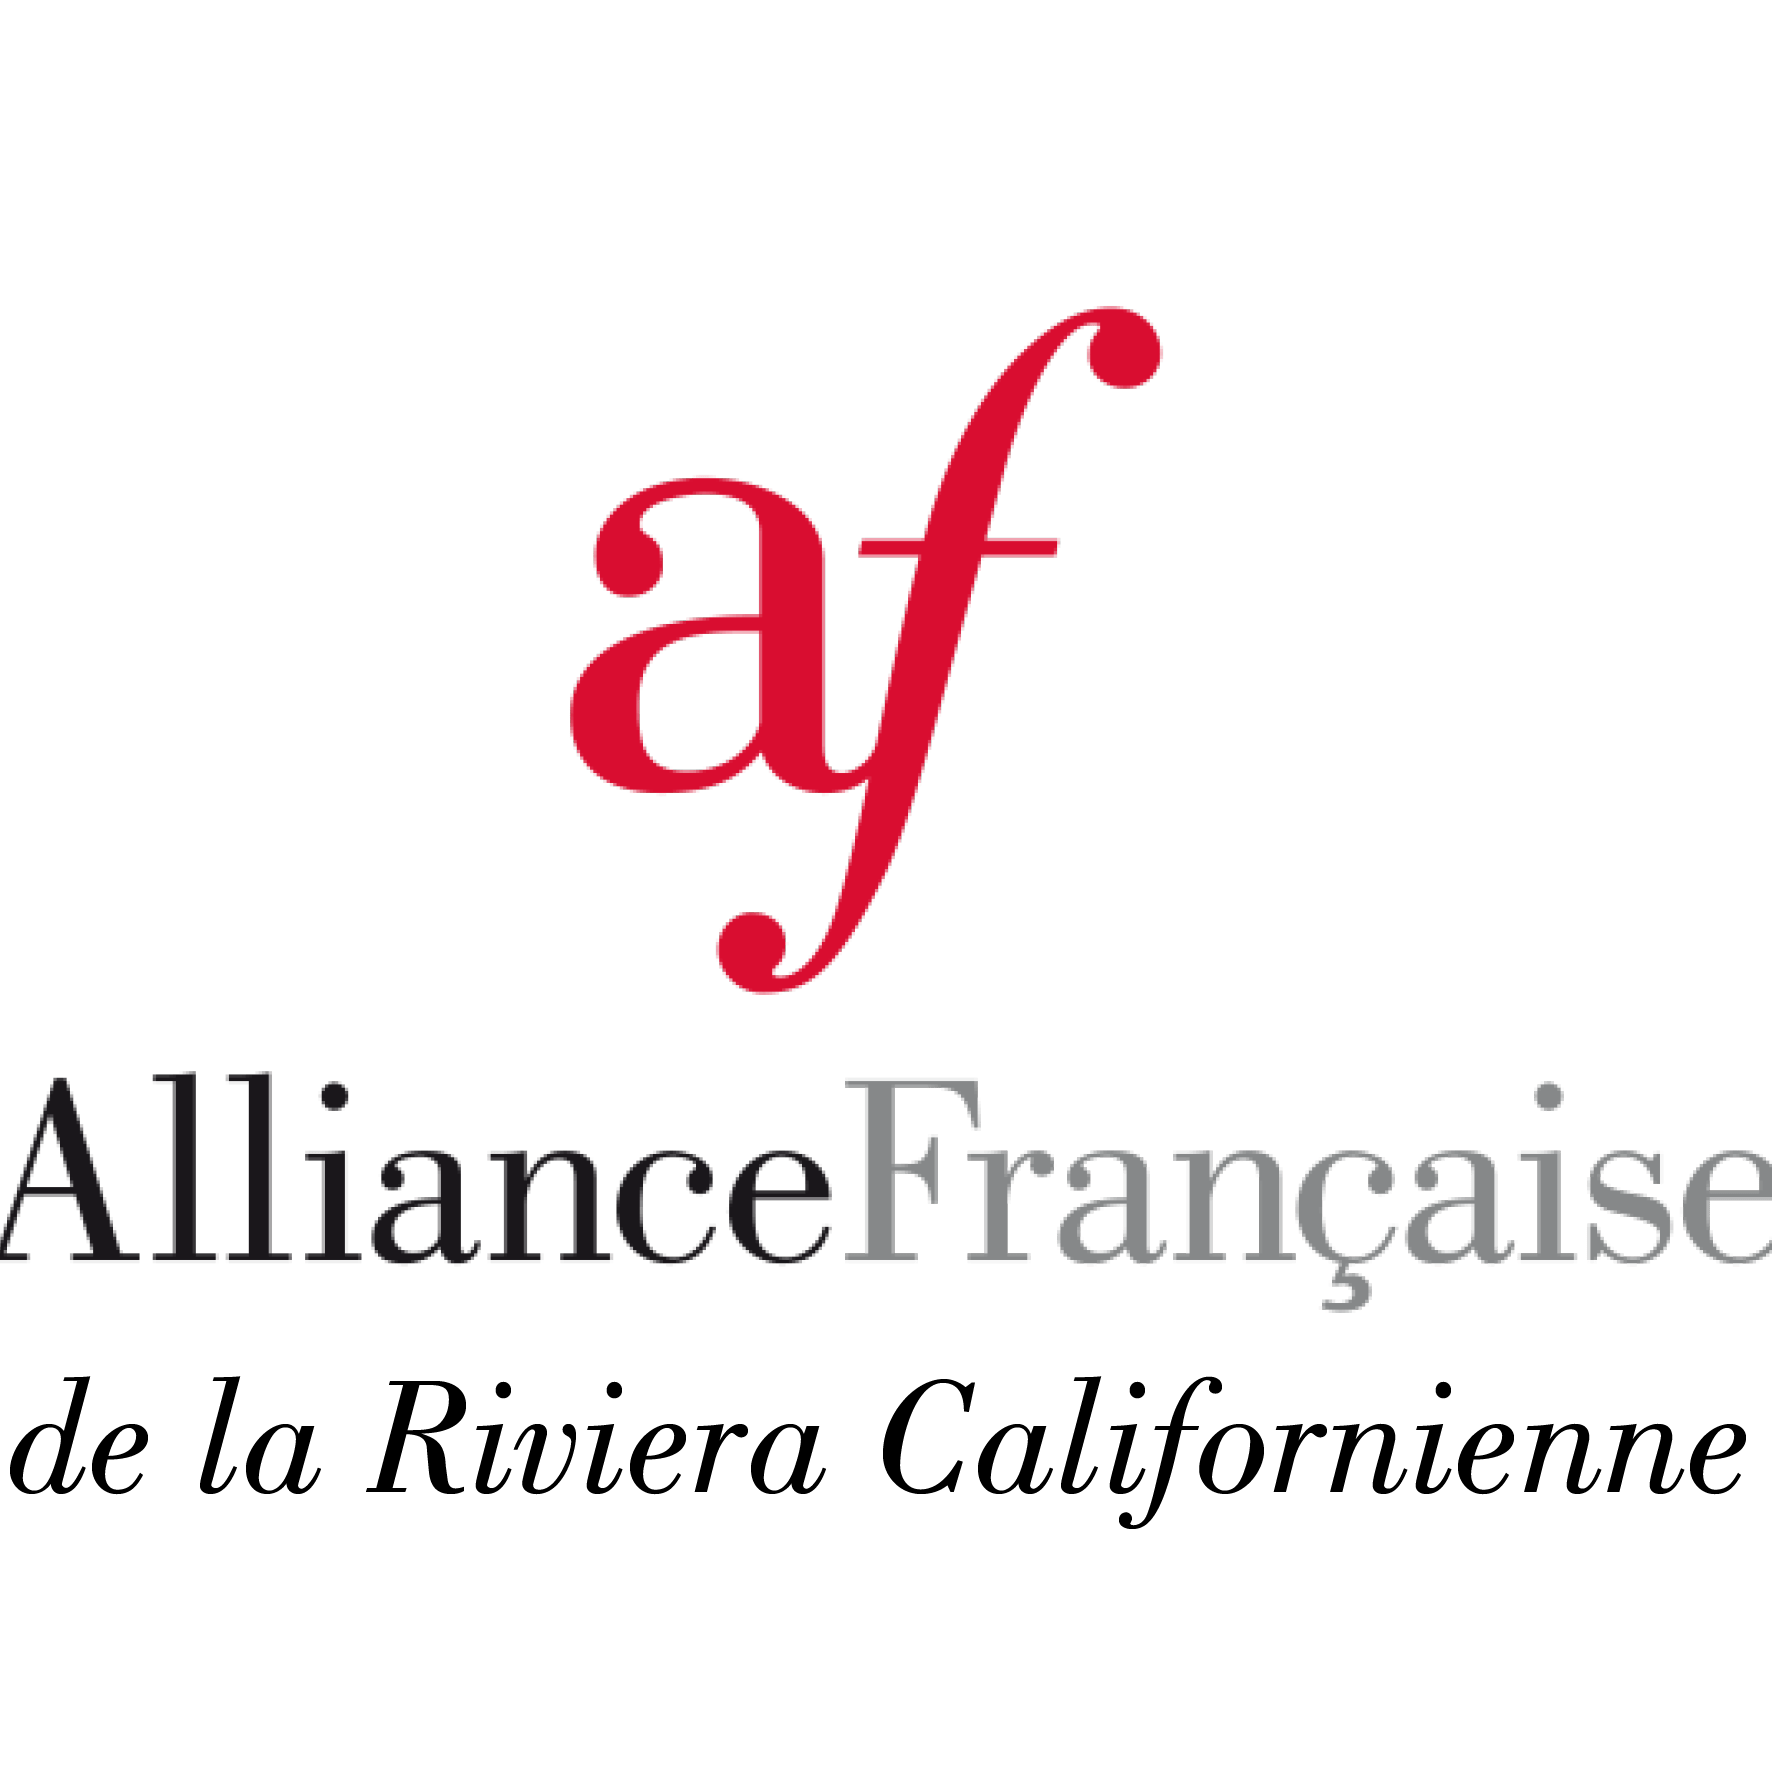 French Speaking Organization in Sacramento California - Alliance Francaise de la Riviera Californienne